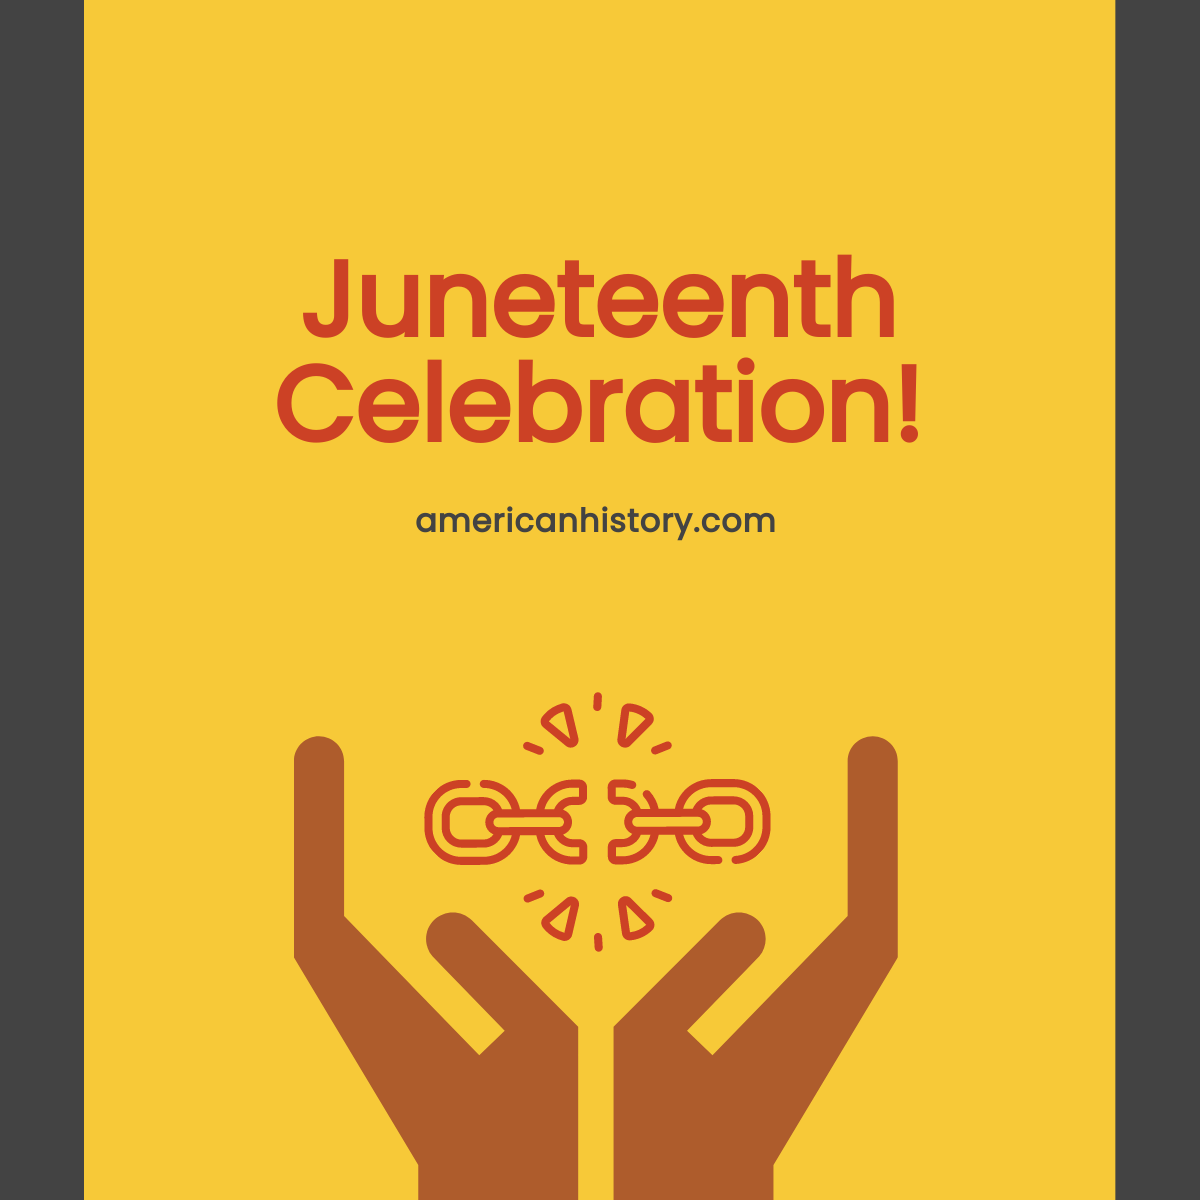 Juneteenth Celebration Linkedin Post Template